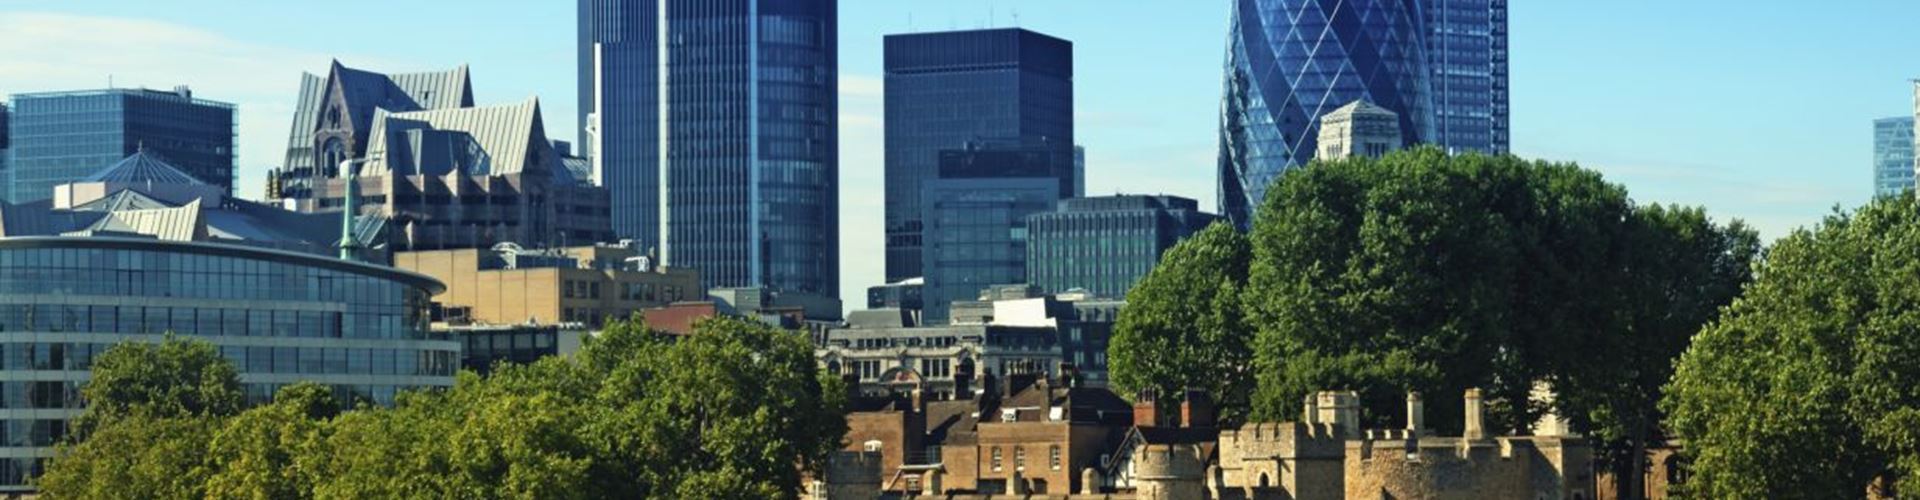 Finance to lead City of London hiring spree